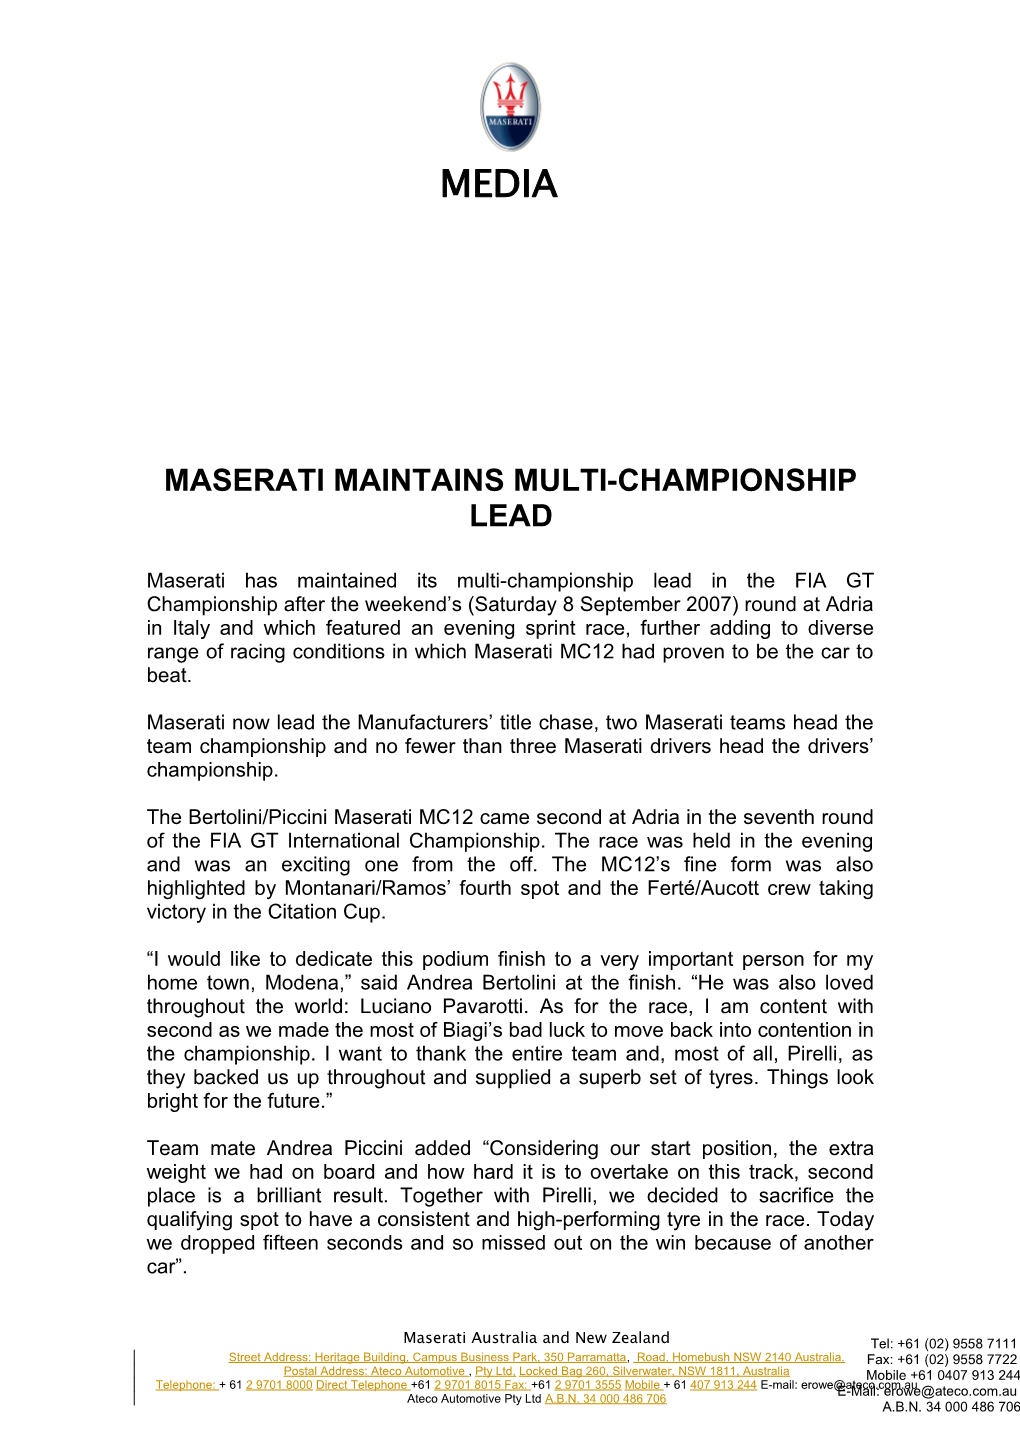 Maserati Maintains Multi-Championship Lead